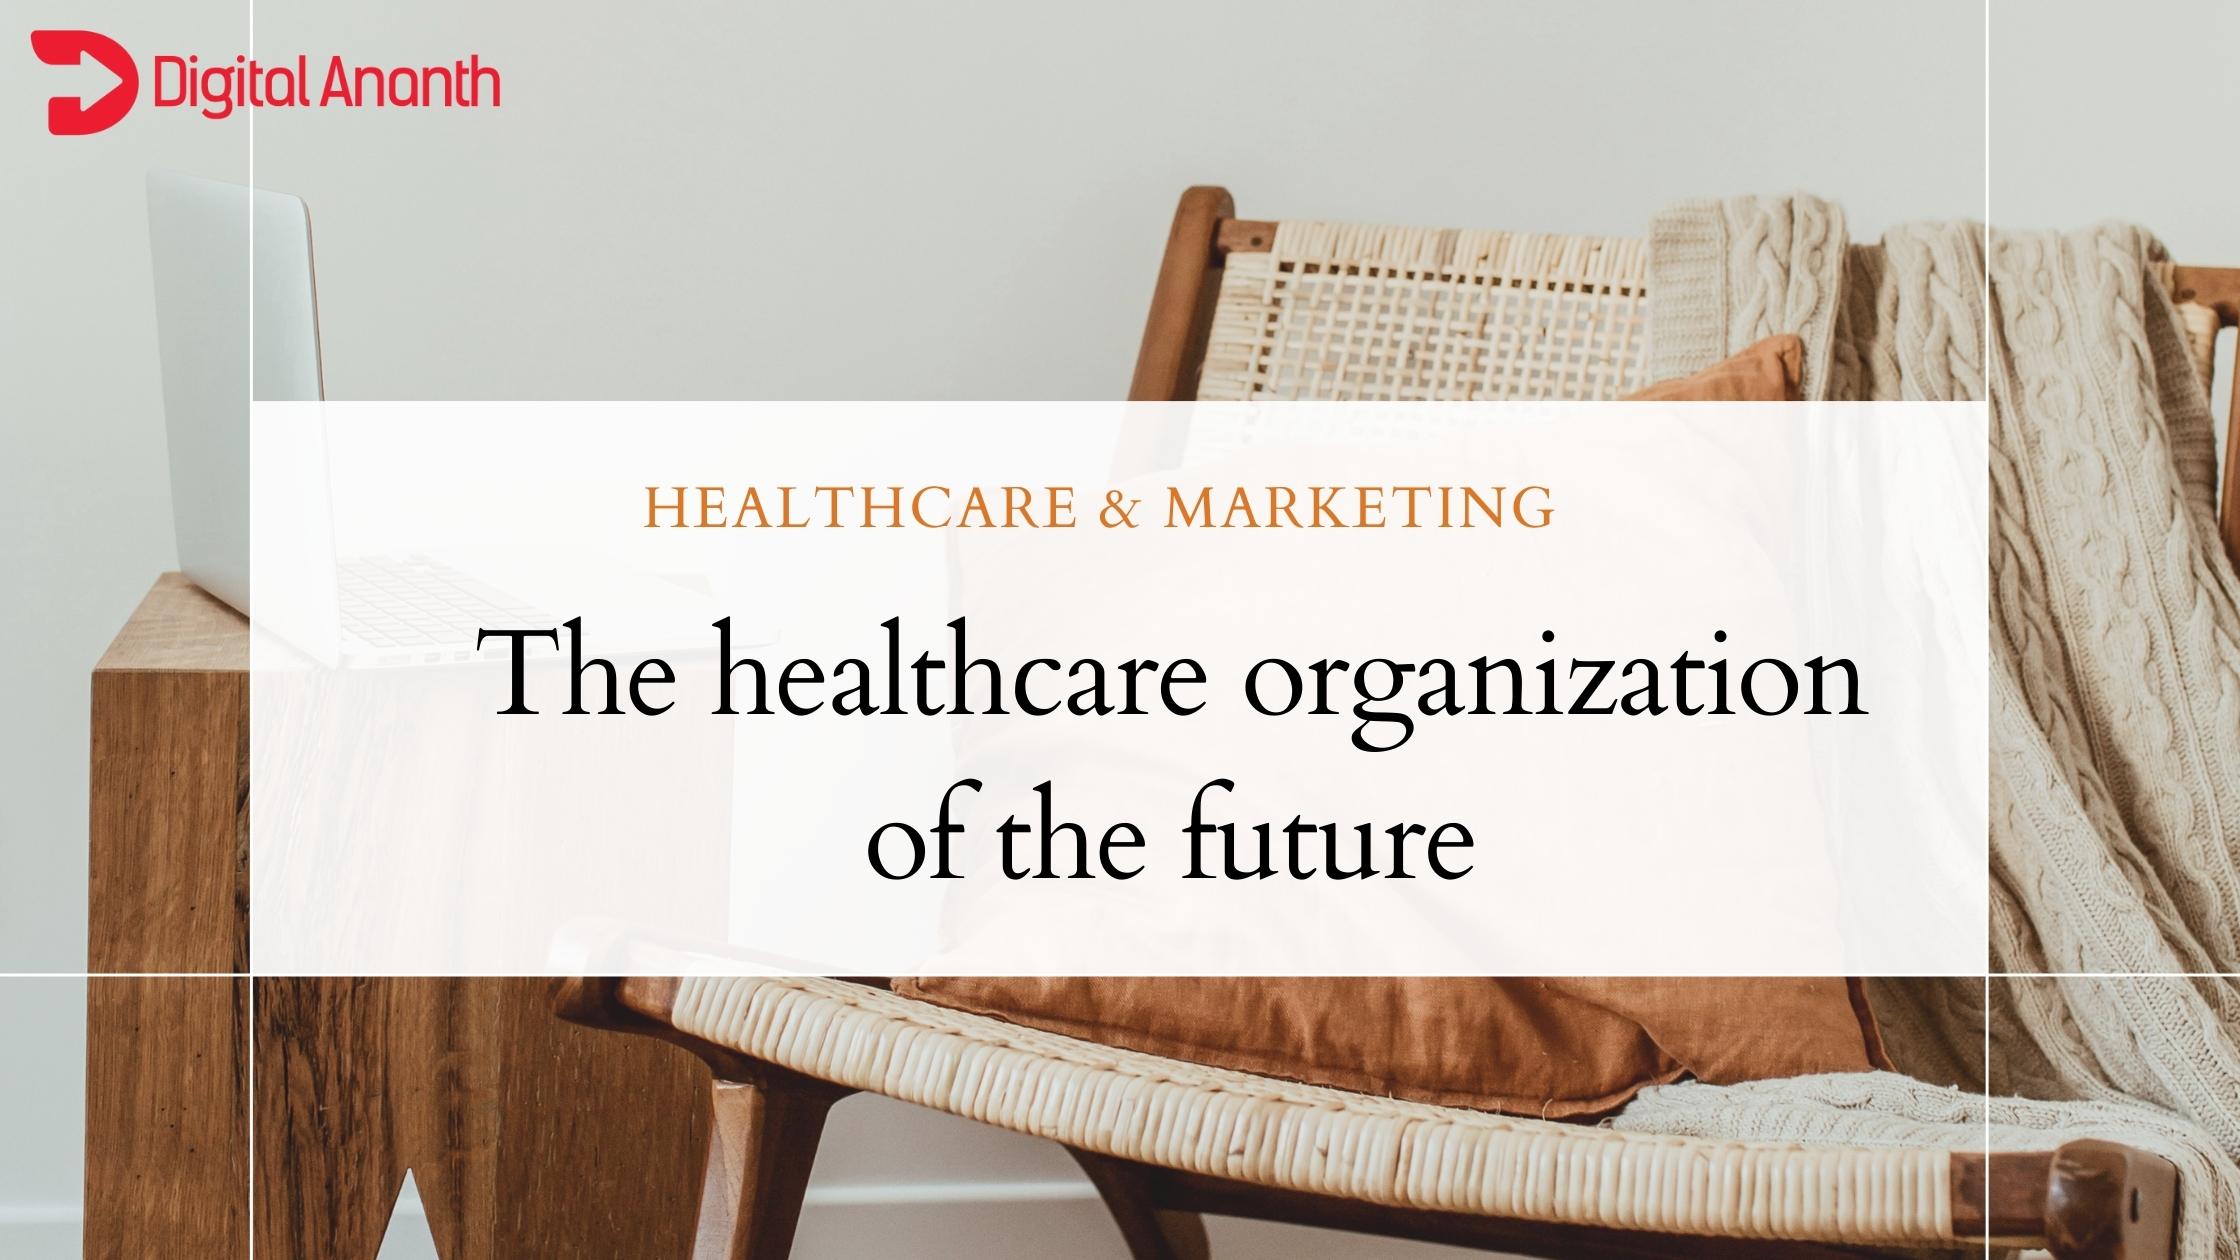 The healthcare organization of the future